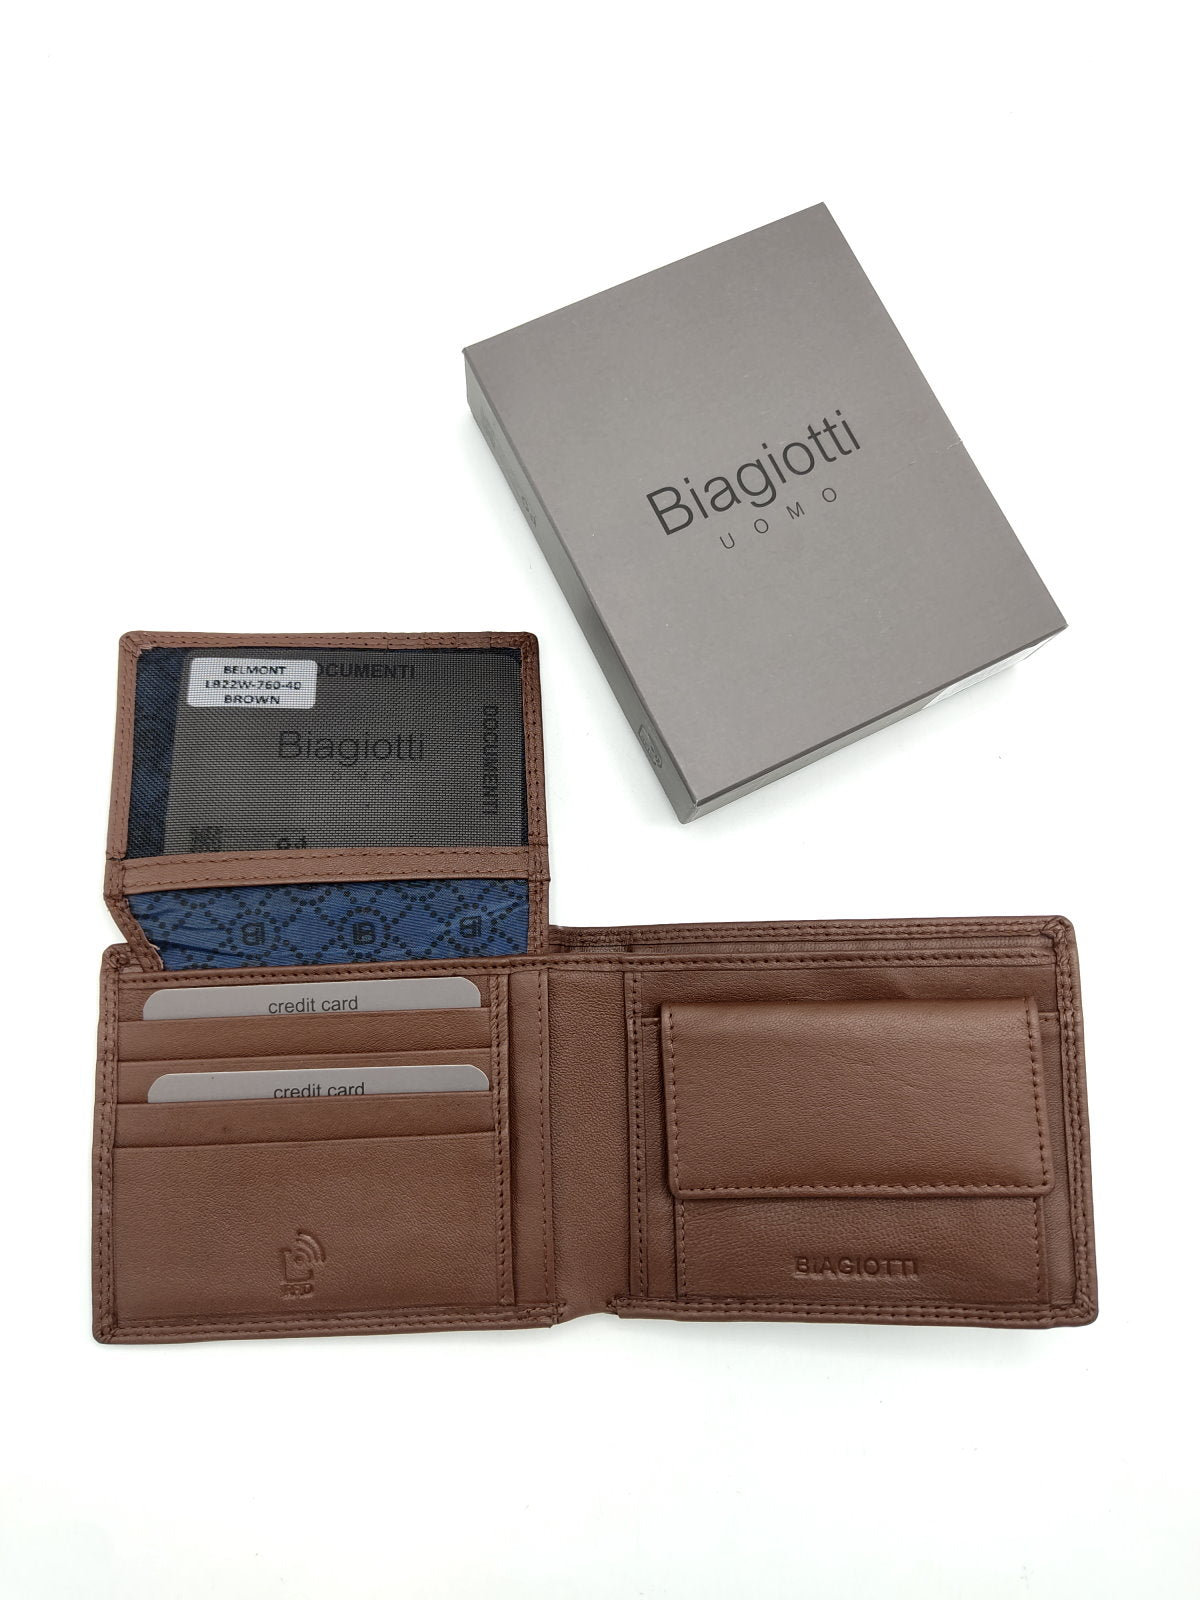 Genuine leather wallet for men, Brand Laura Biagiotti, art. LB760-40.290